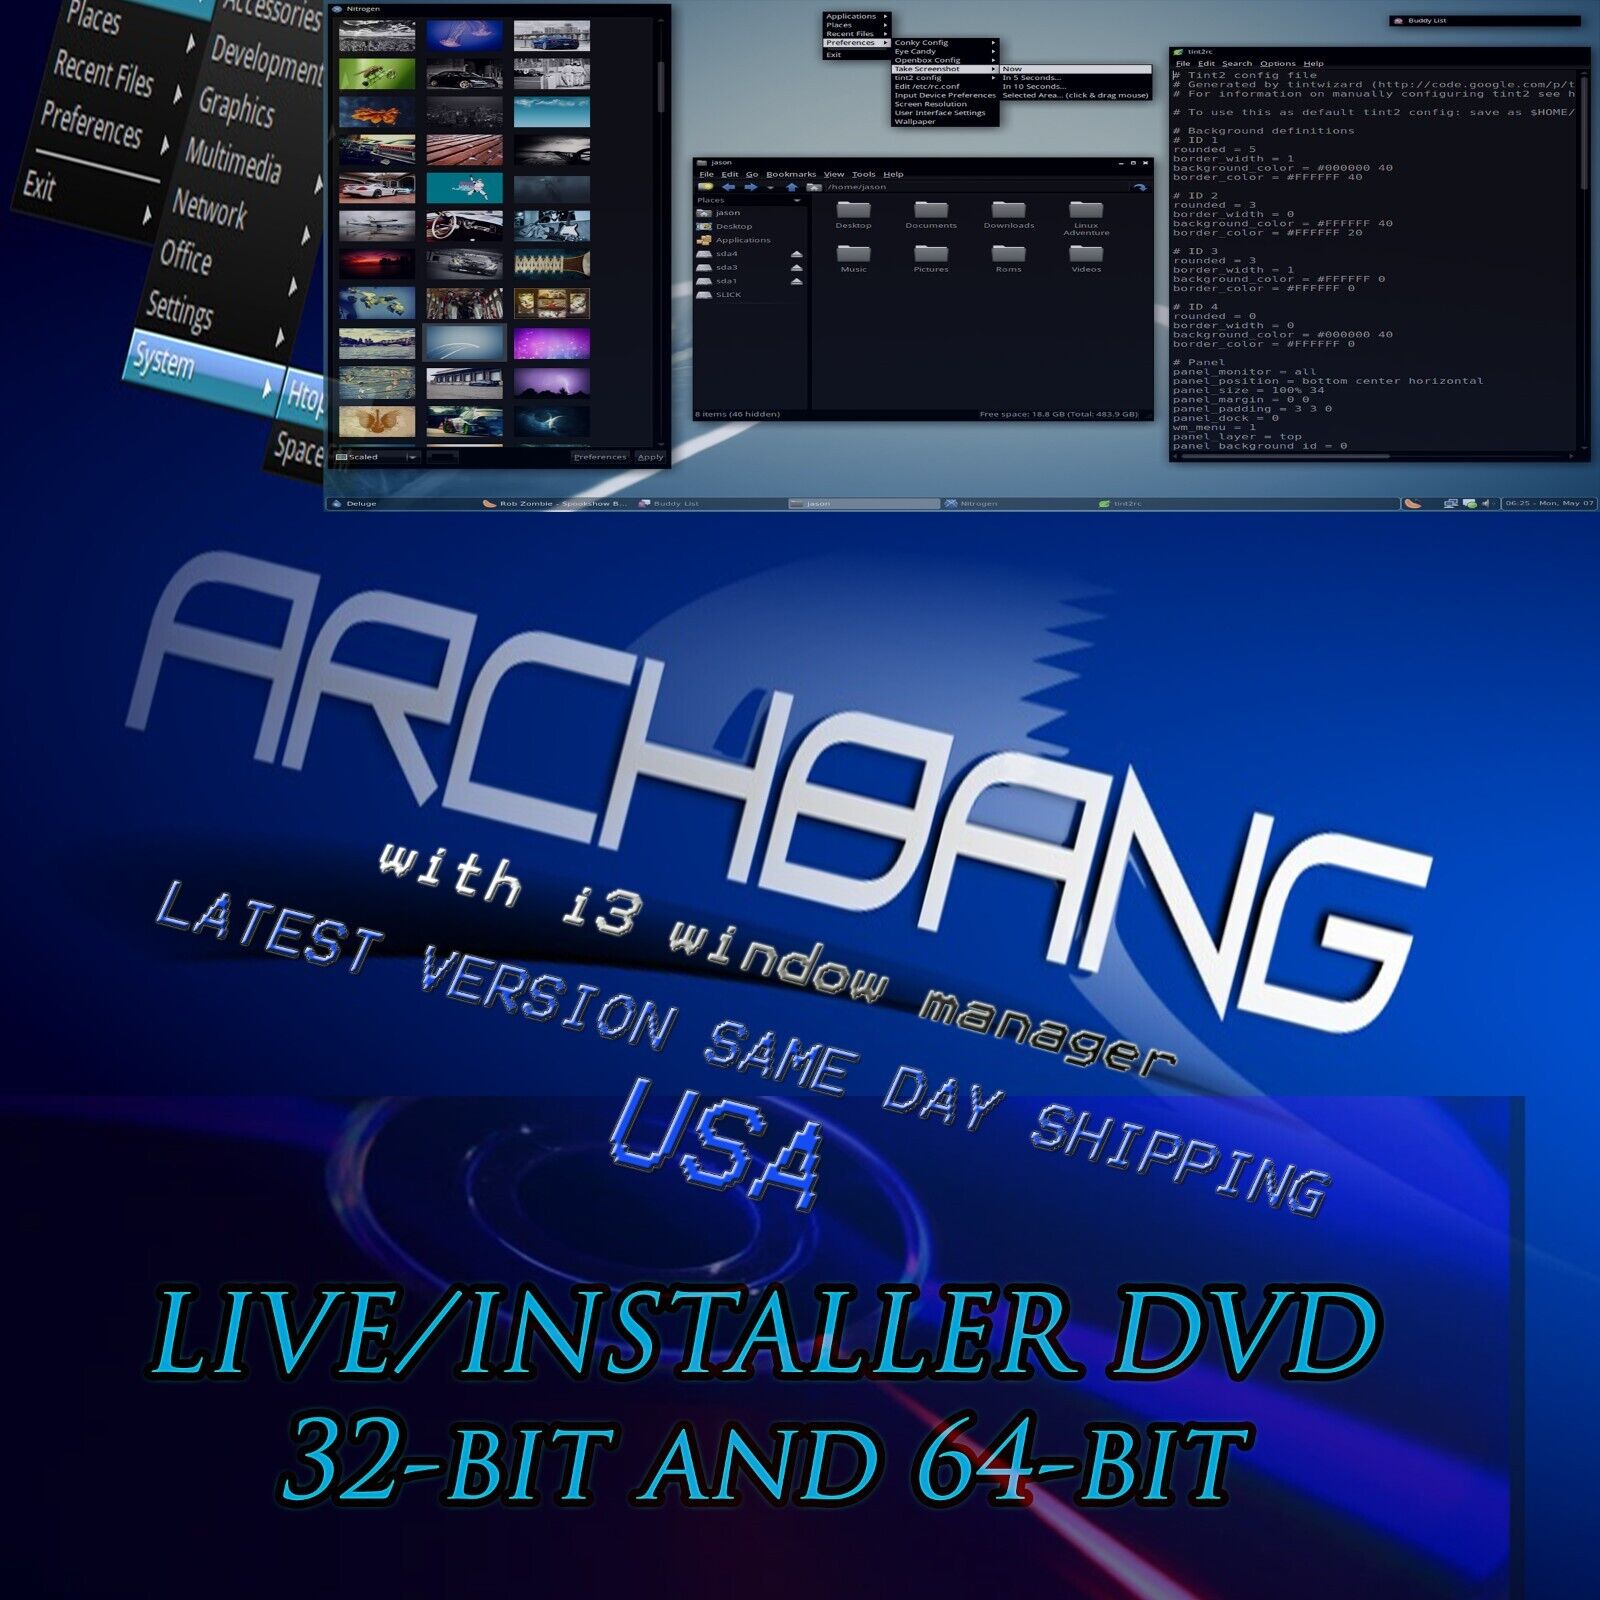 ArchBang Linux DVD simple lightweight Linux distribution 32-Bit and 64-Bit USA